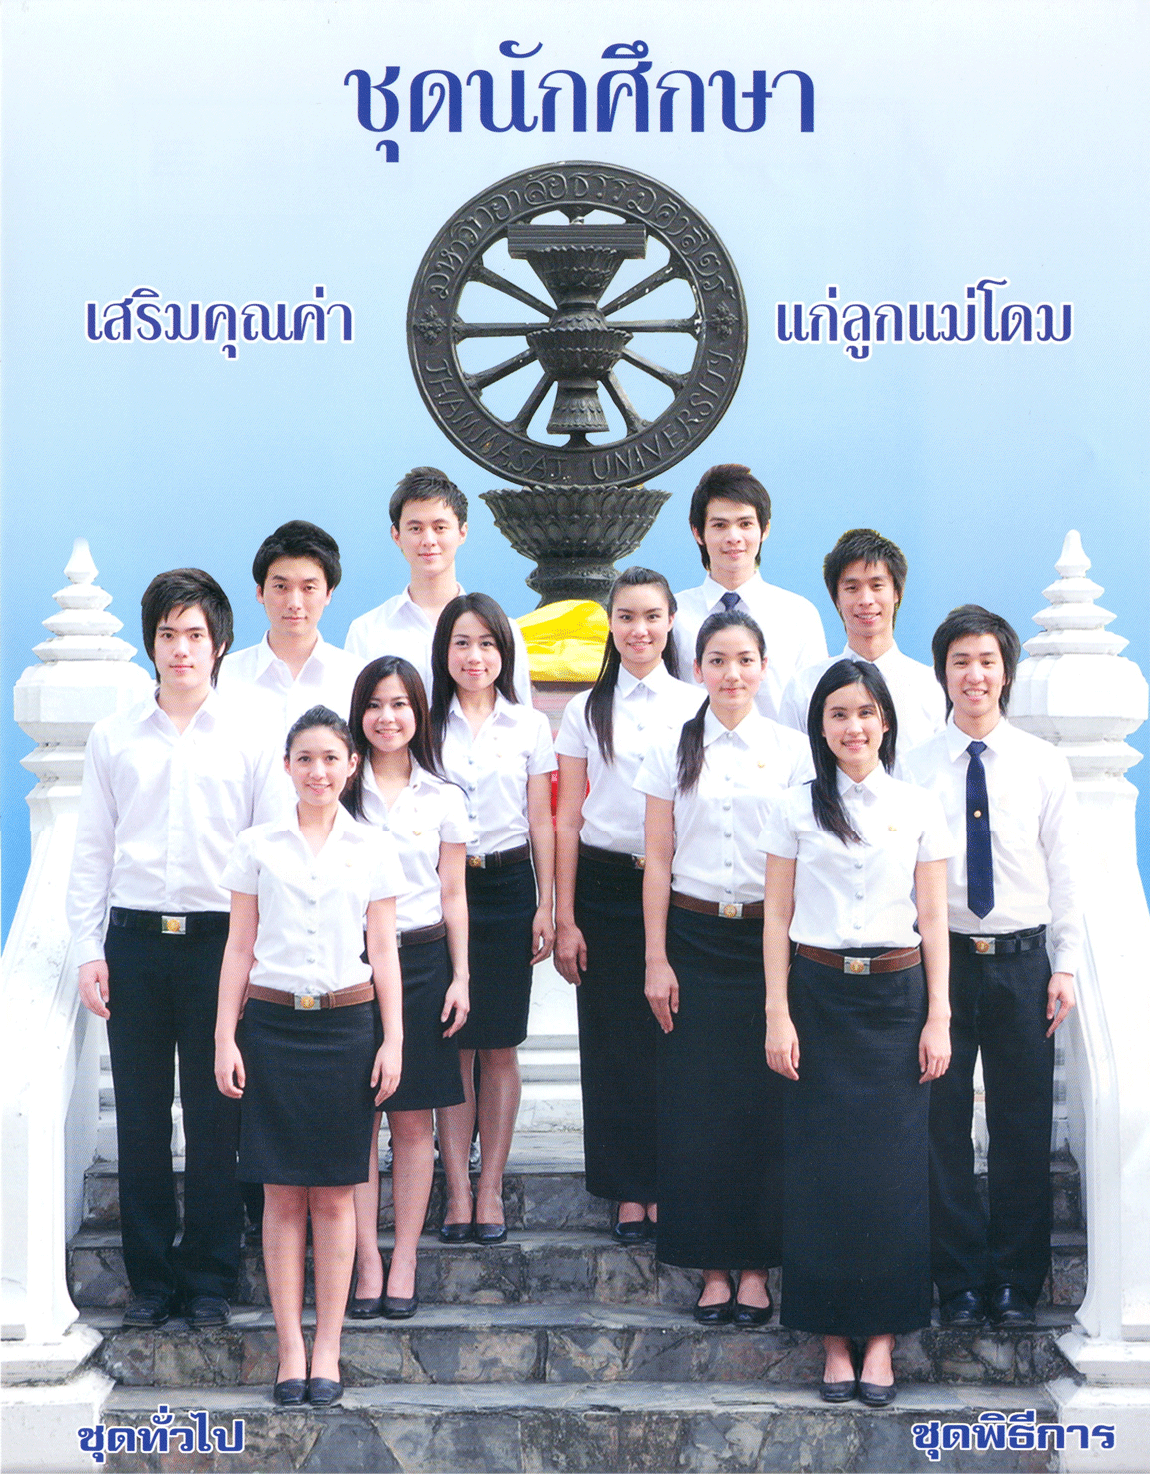 School Uniforms At Thai Universities An